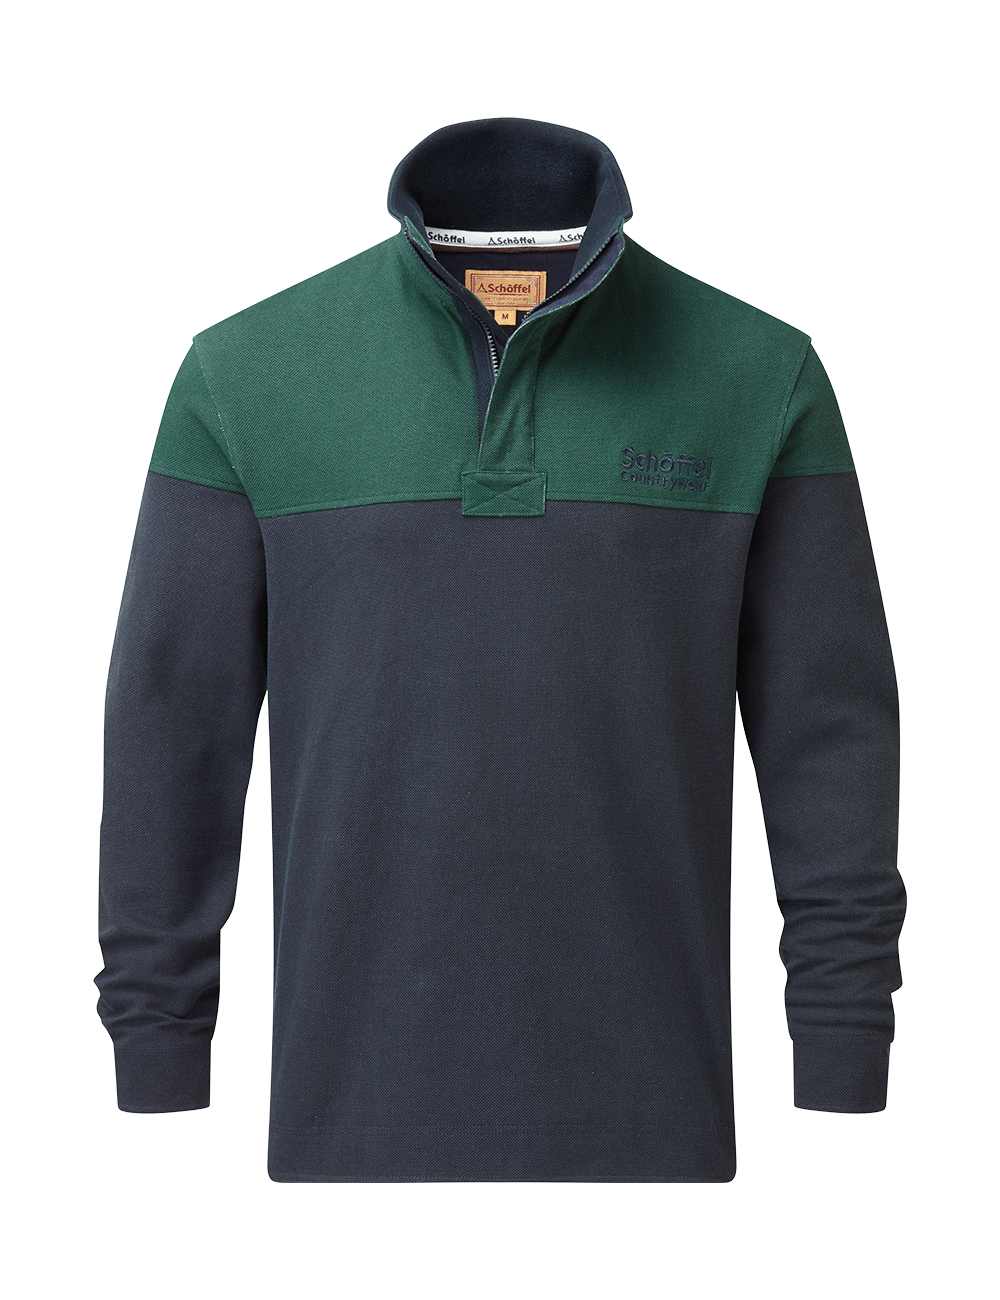 Schoffel Helford Heritage Sweatshirt - Navy/Pine Green